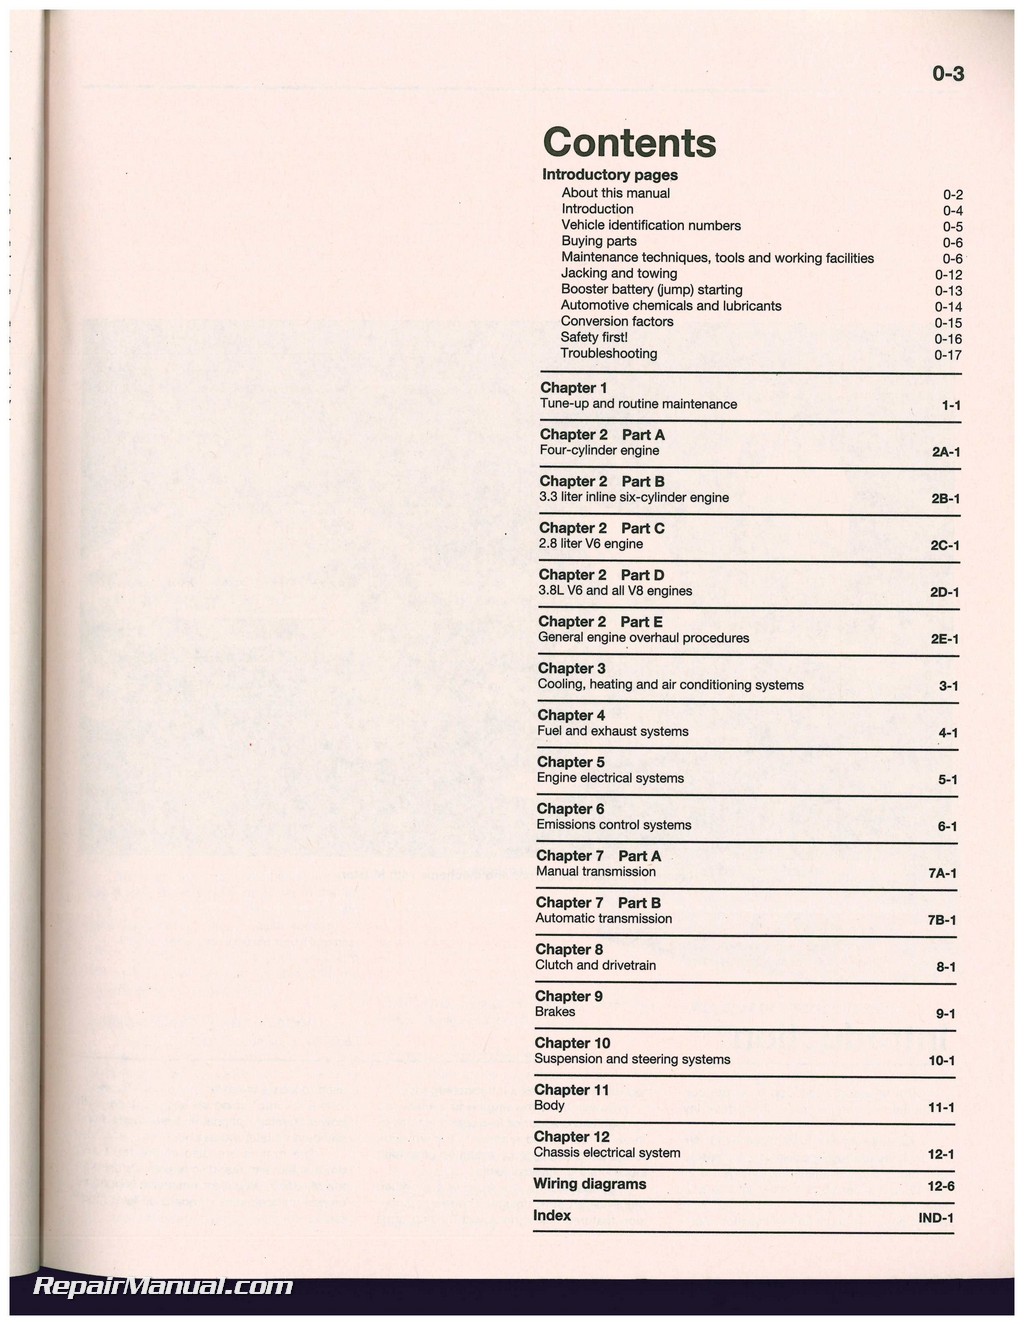 1993 Mercury Capri Owners Manual